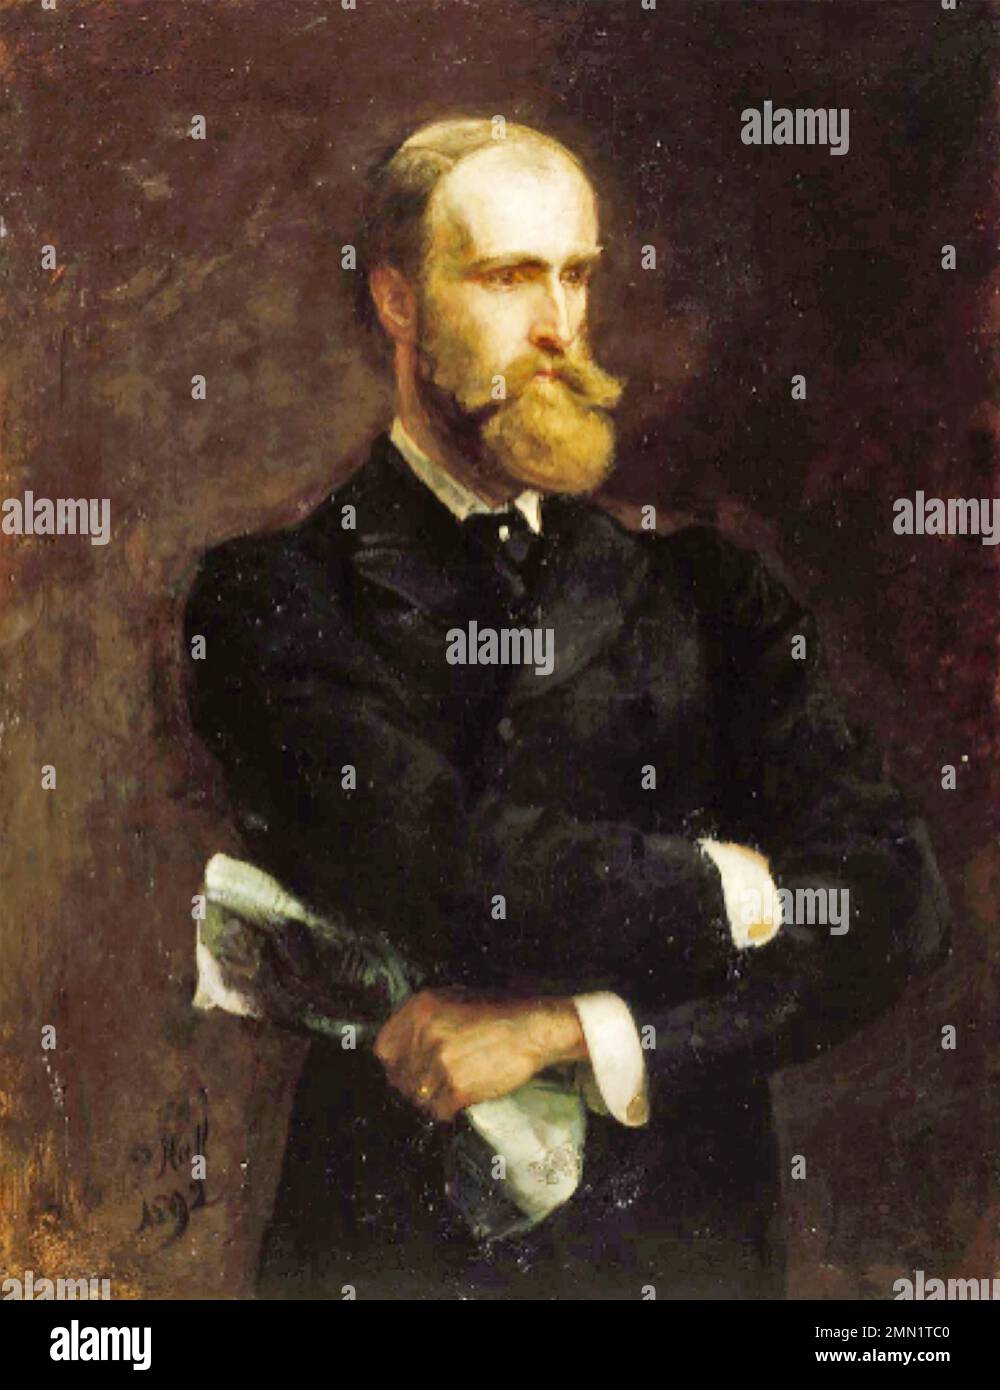 CHARLES STEWART PARNELL (1846-1891) Irish nationalist about 1880 by unknown artist Stock Photo